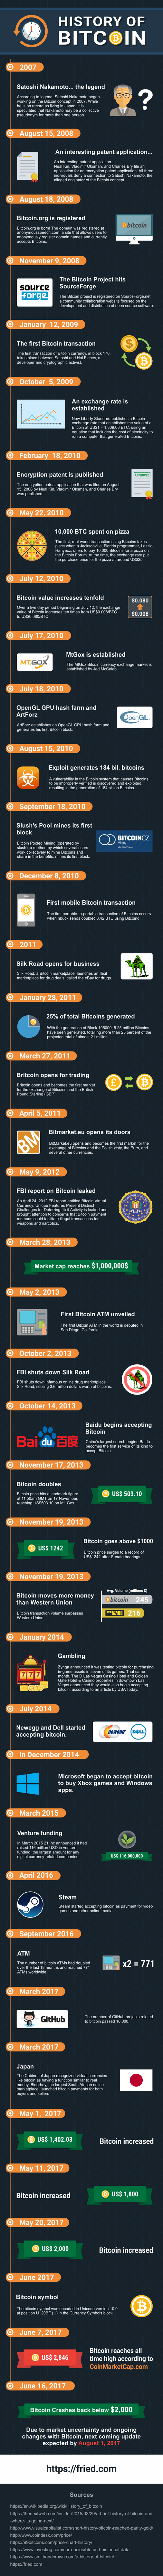 QUE.com.History-of-Bitcoin-Infographic